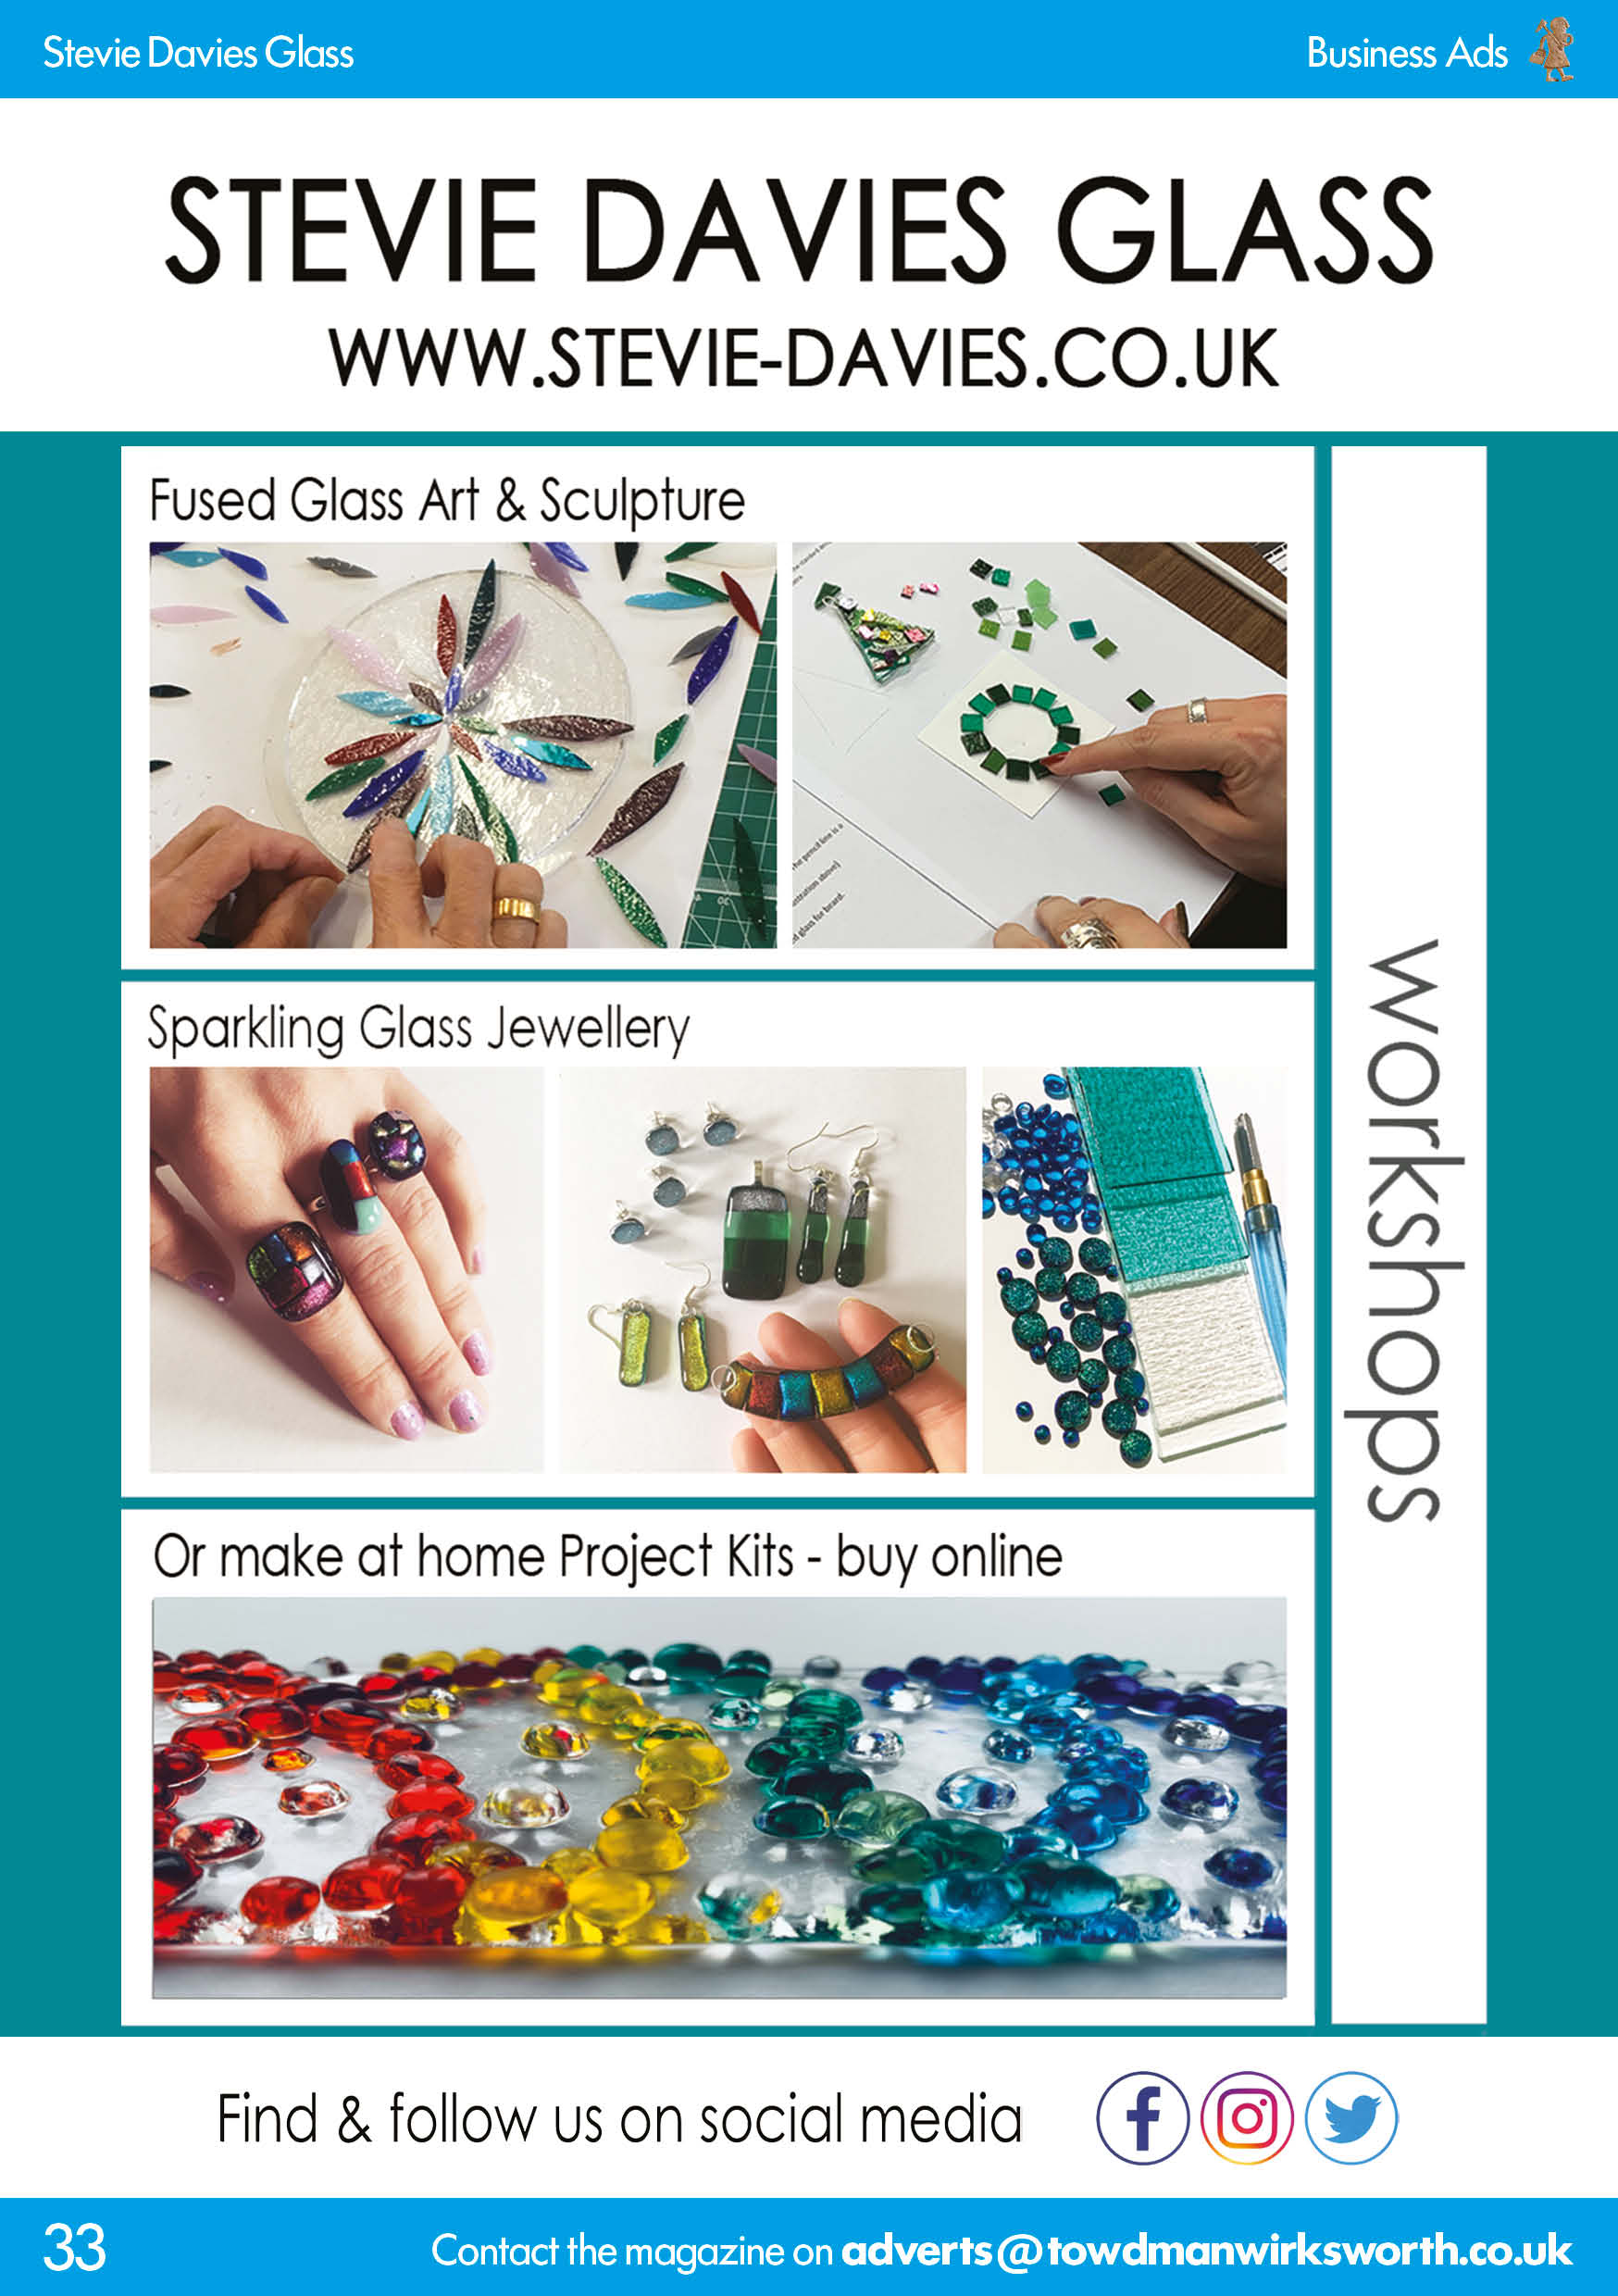 Stevie Davies Glass